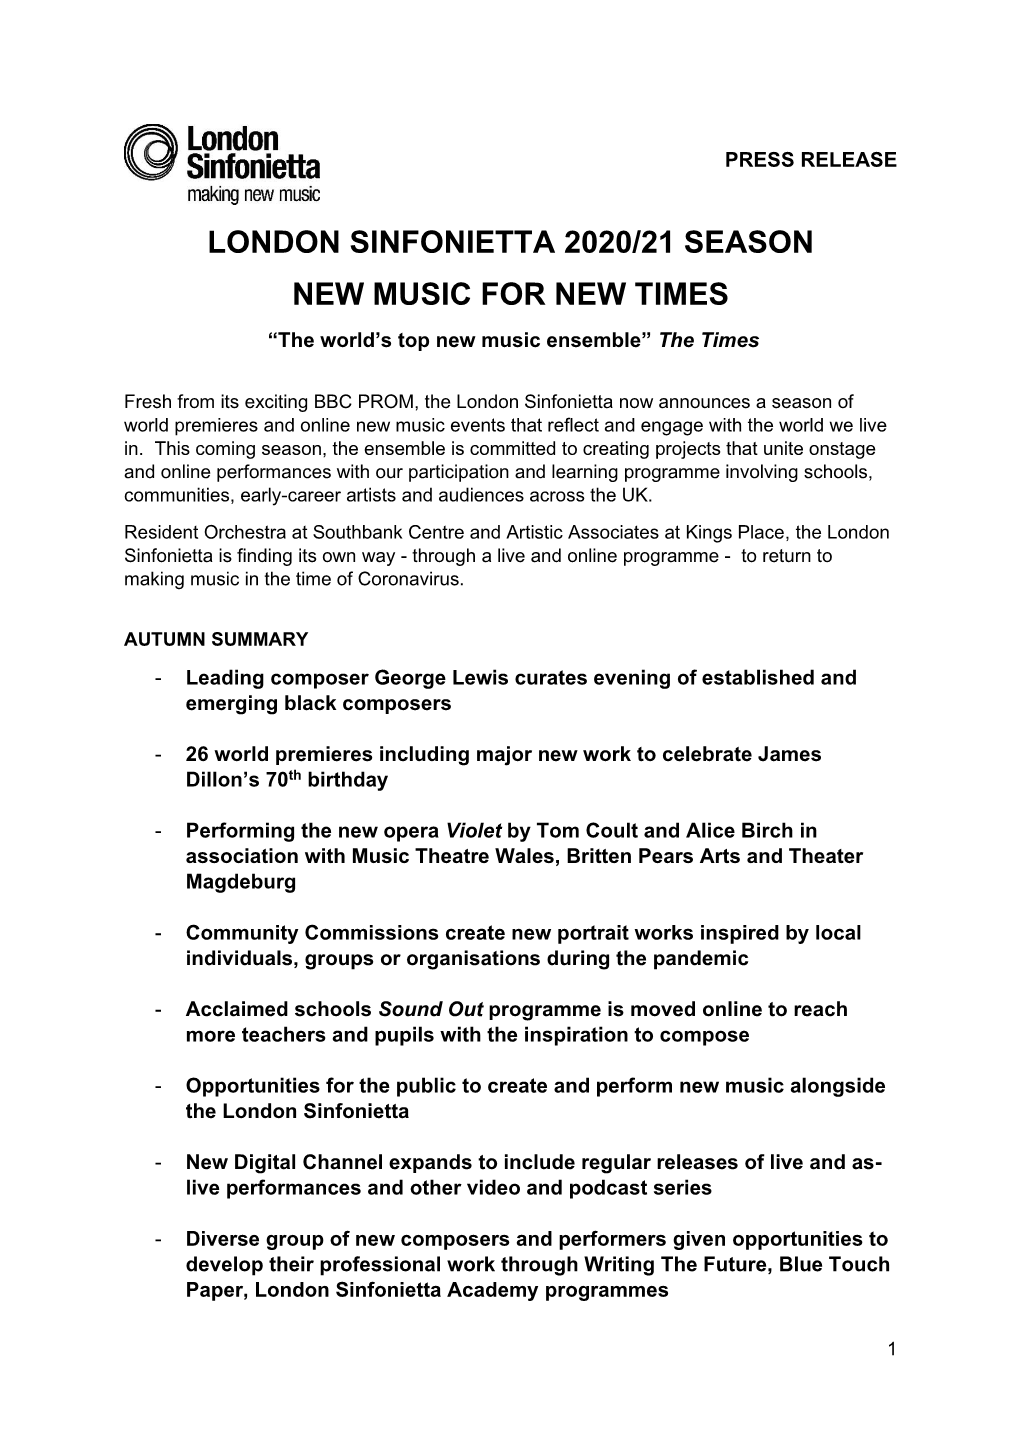 LONDON SINFONIETTA 2020/21 SEASON NEW MUSIC for NEW TIMES “The World’S Top New Music Ensemble” the Times